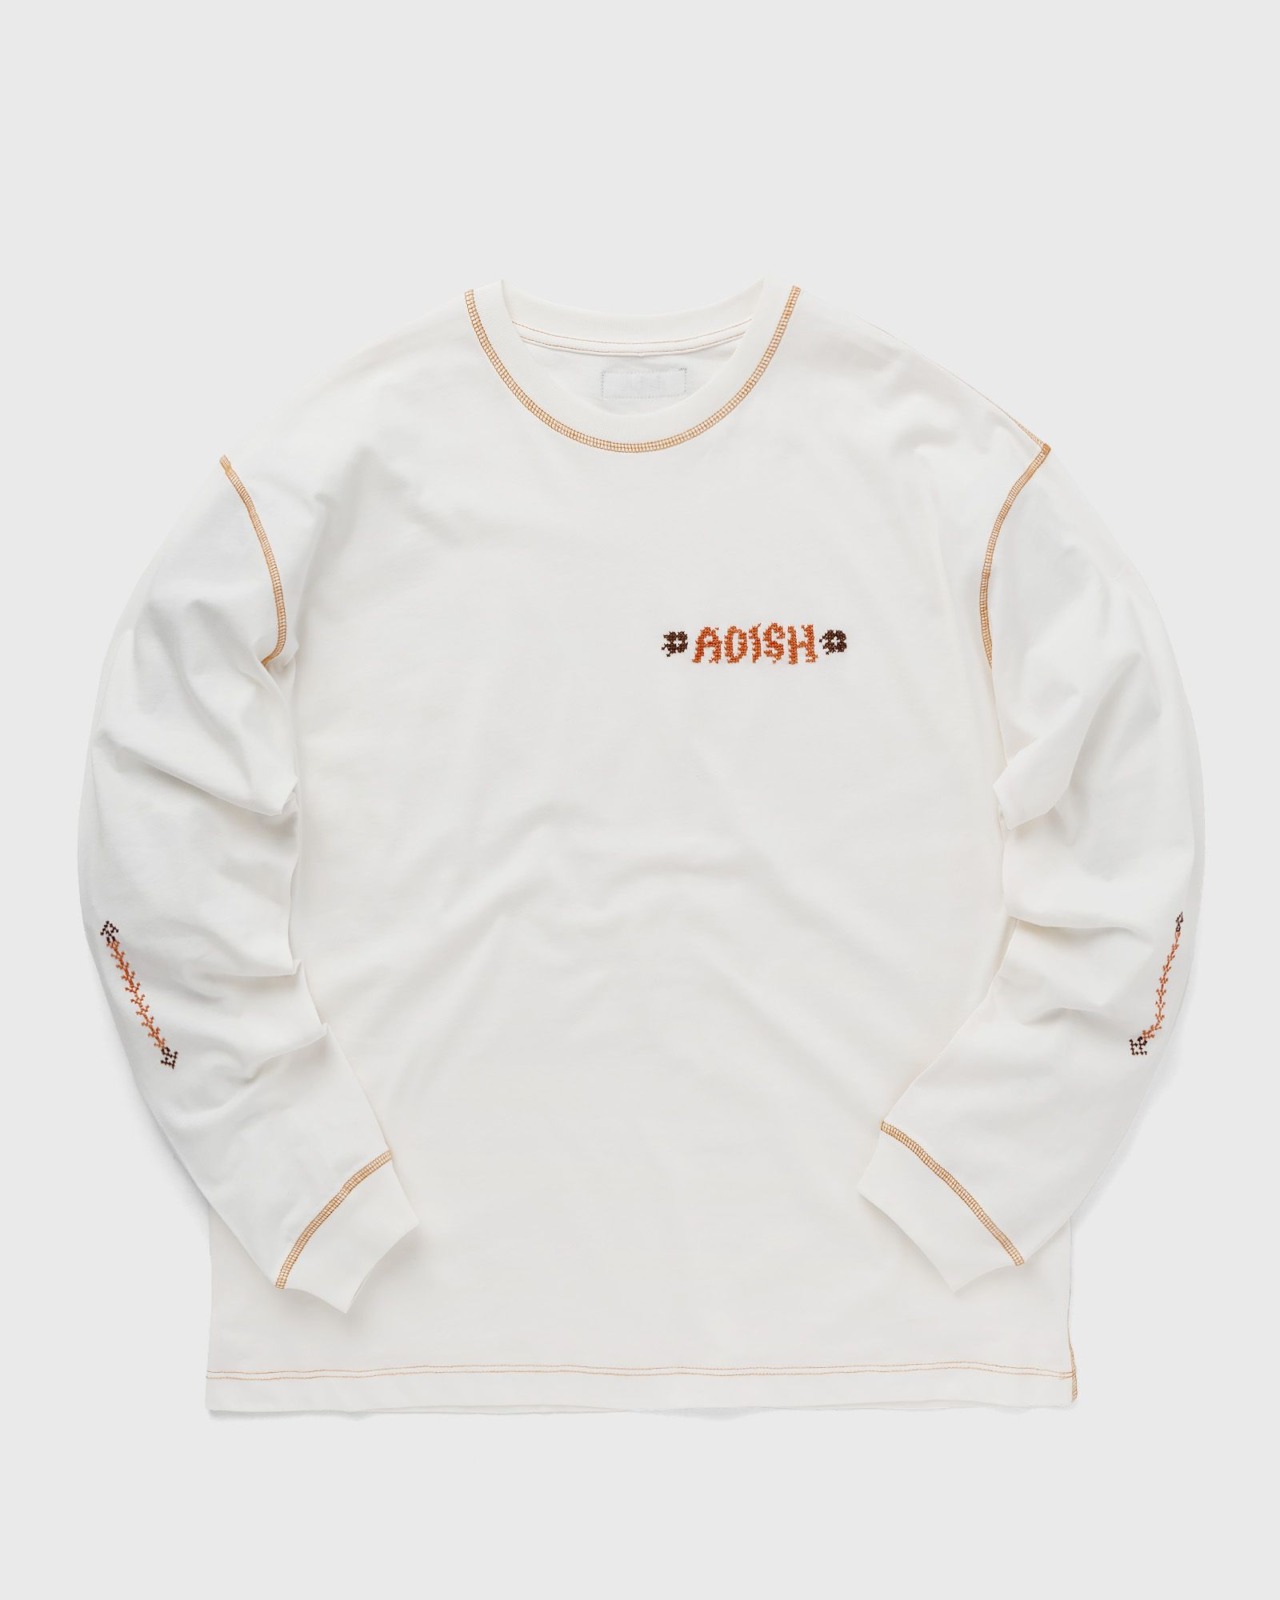 Adish - White - Gents T-Shirt - Bstn GOOFASH